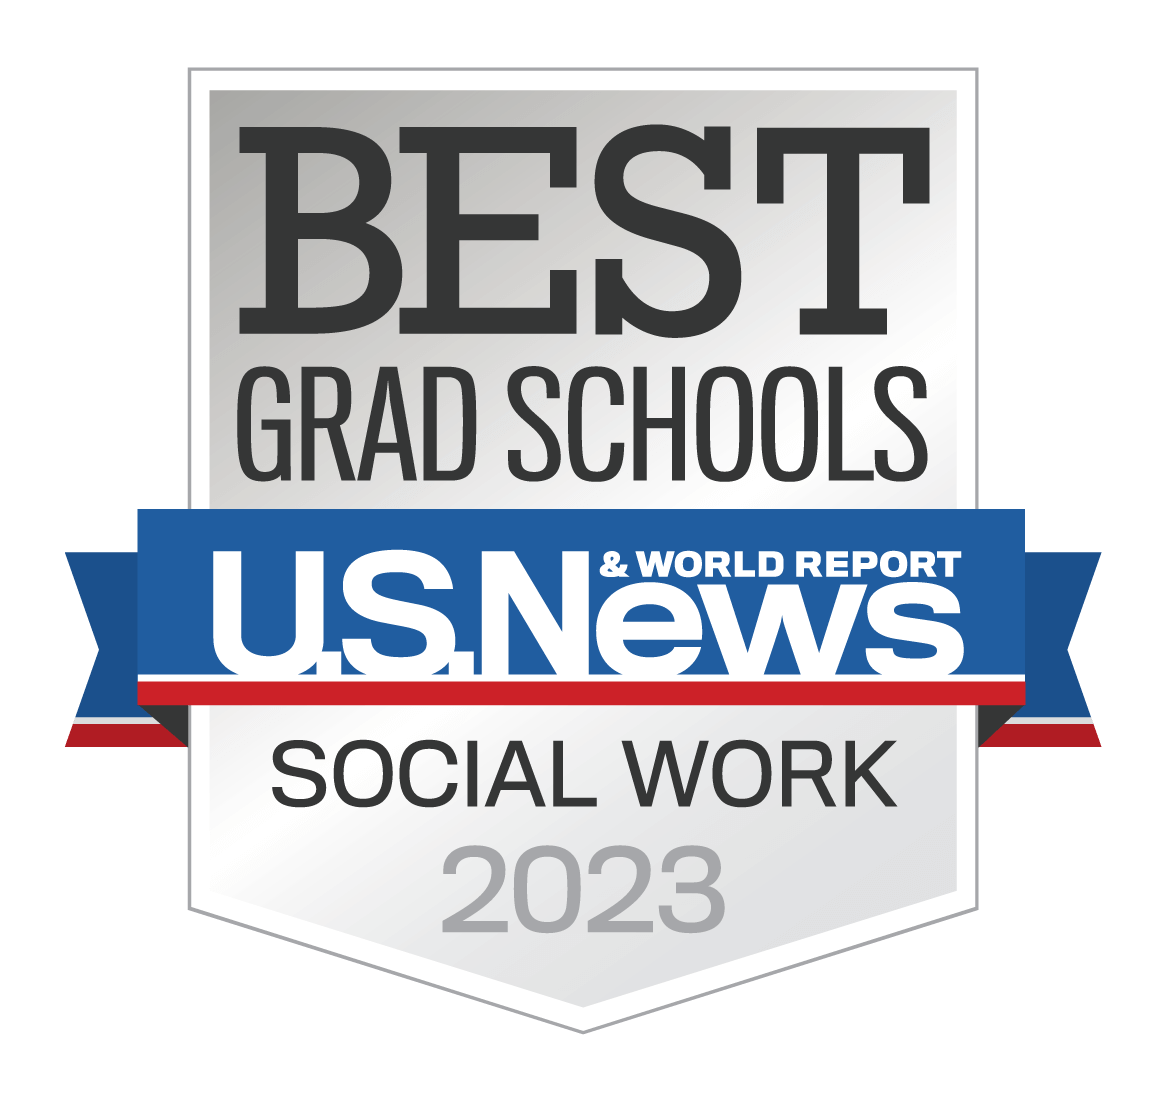 Best Grad Schools - U.S. News & World Report - Social Work 2023